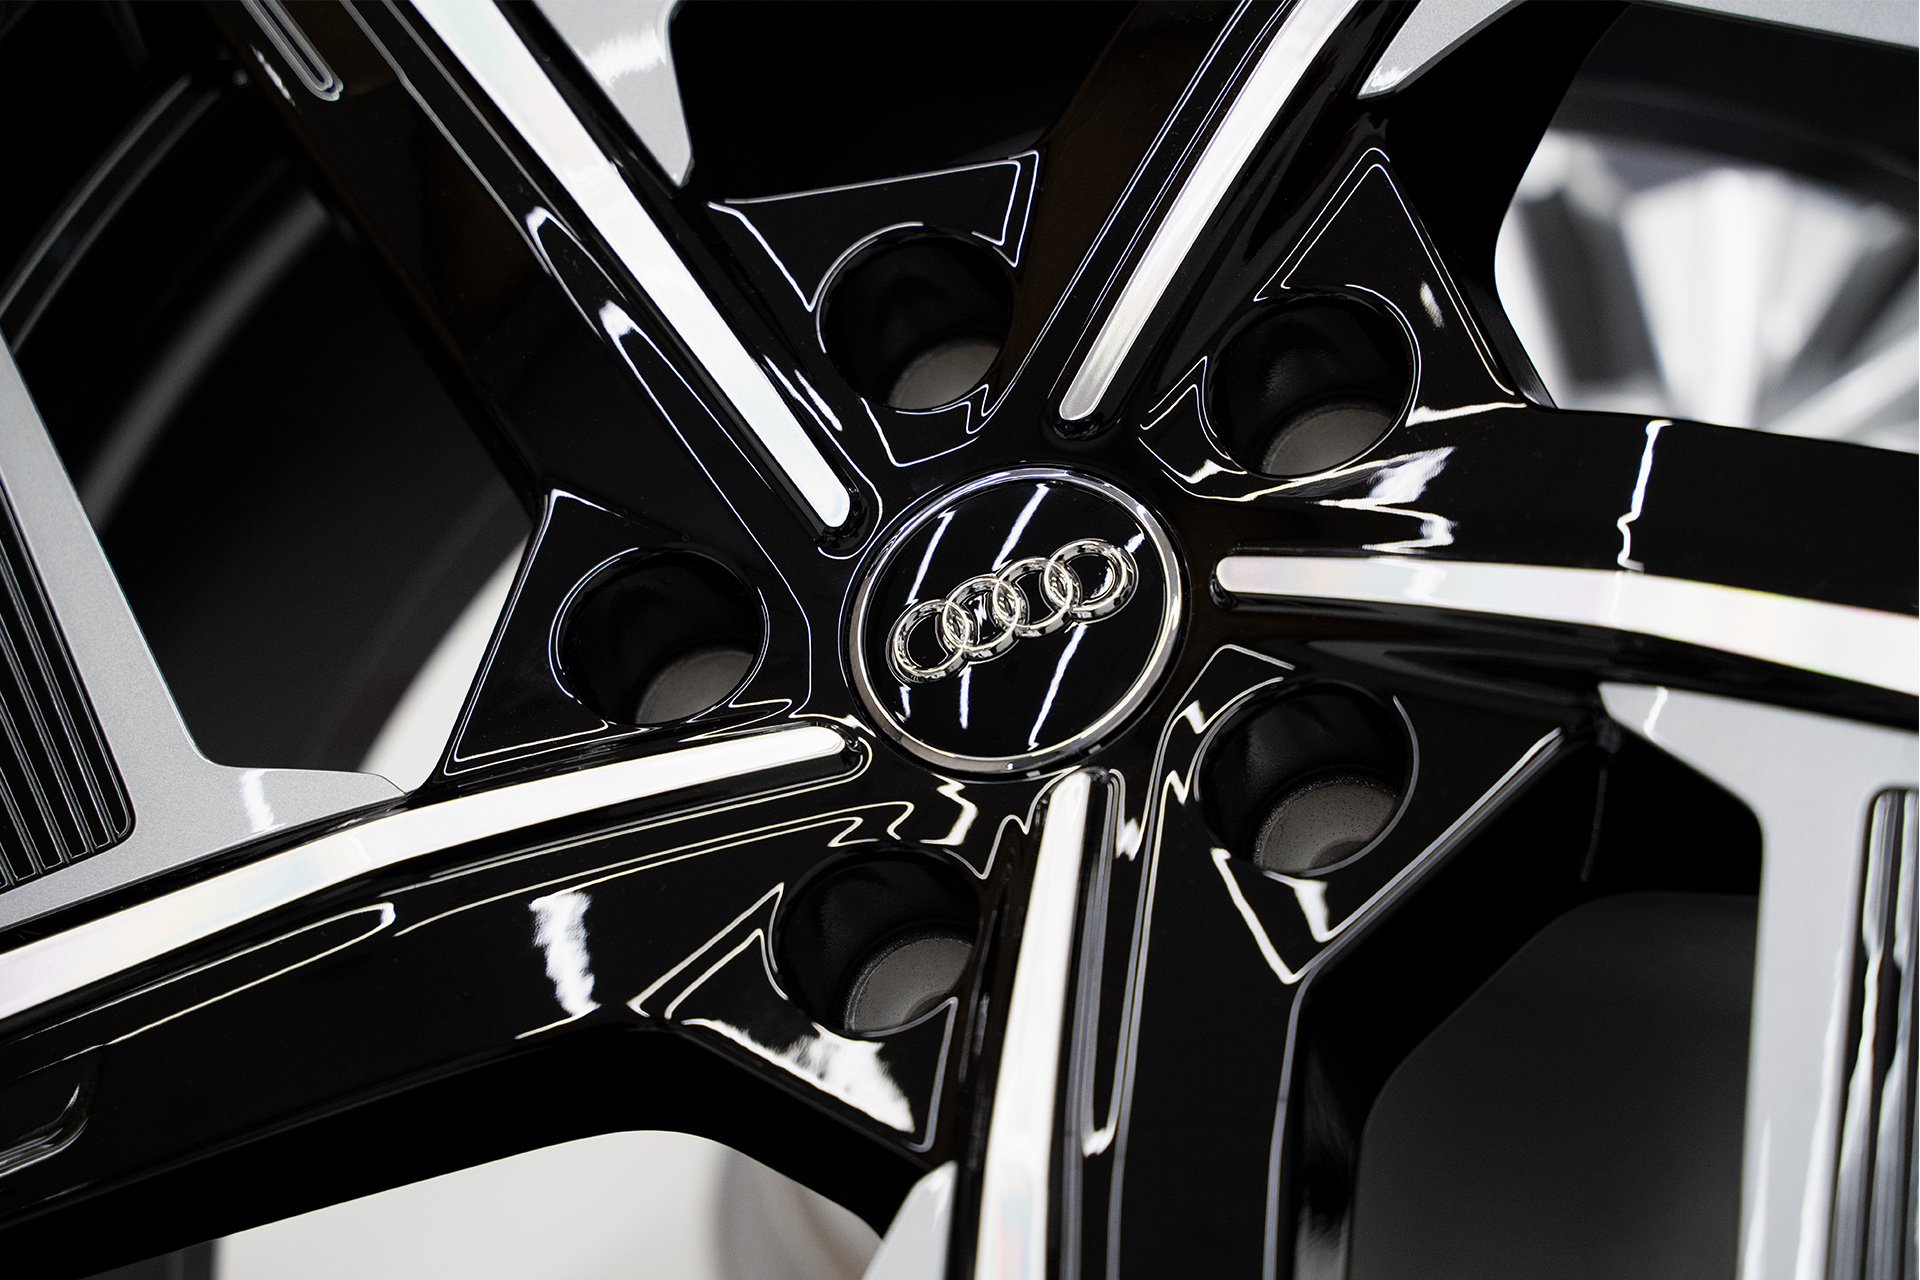 Detailed illustration of the Audi aero wheel.